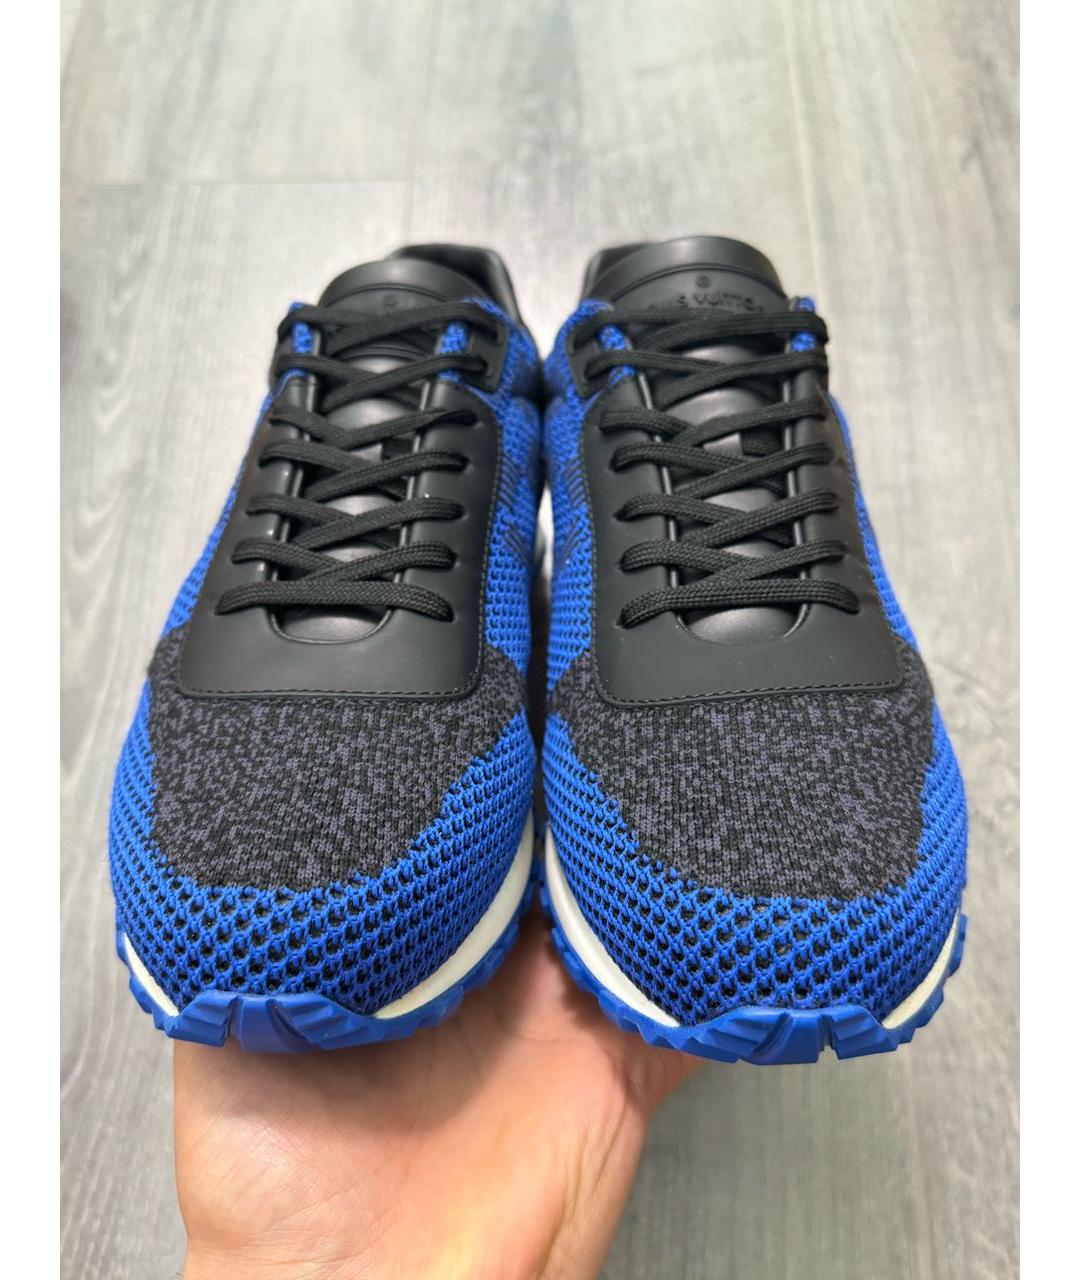 LOUIS VUITTON PRE-OWNED Синие синтетические низкие кроссовки / кеды, фото 2